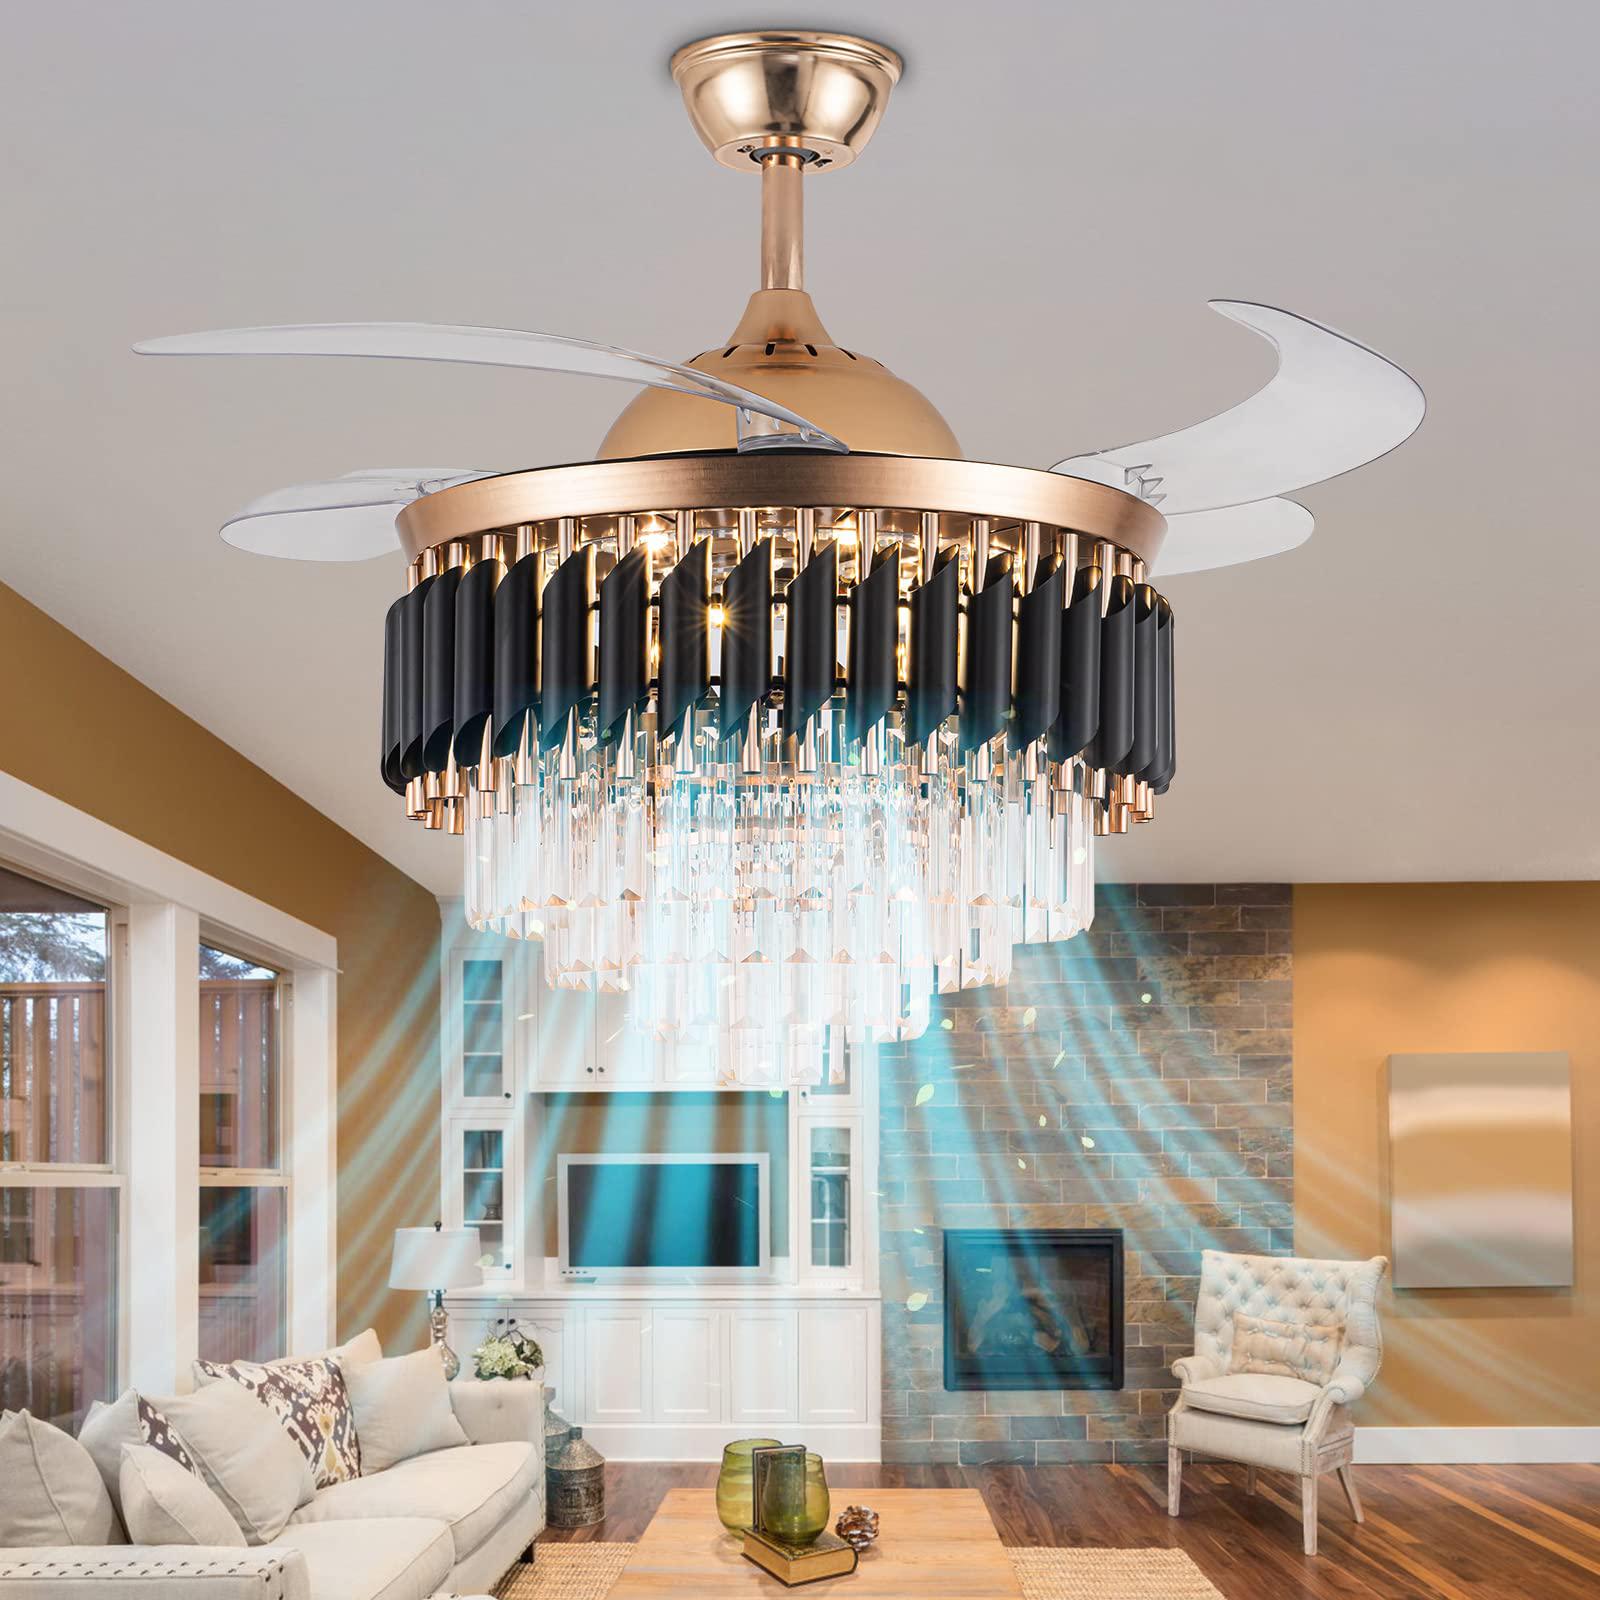 shinleypack crystal ceiling fan with light,42 inch crystal fandelier, modern retractable ceiling fan 6 speeds indoor chandeli